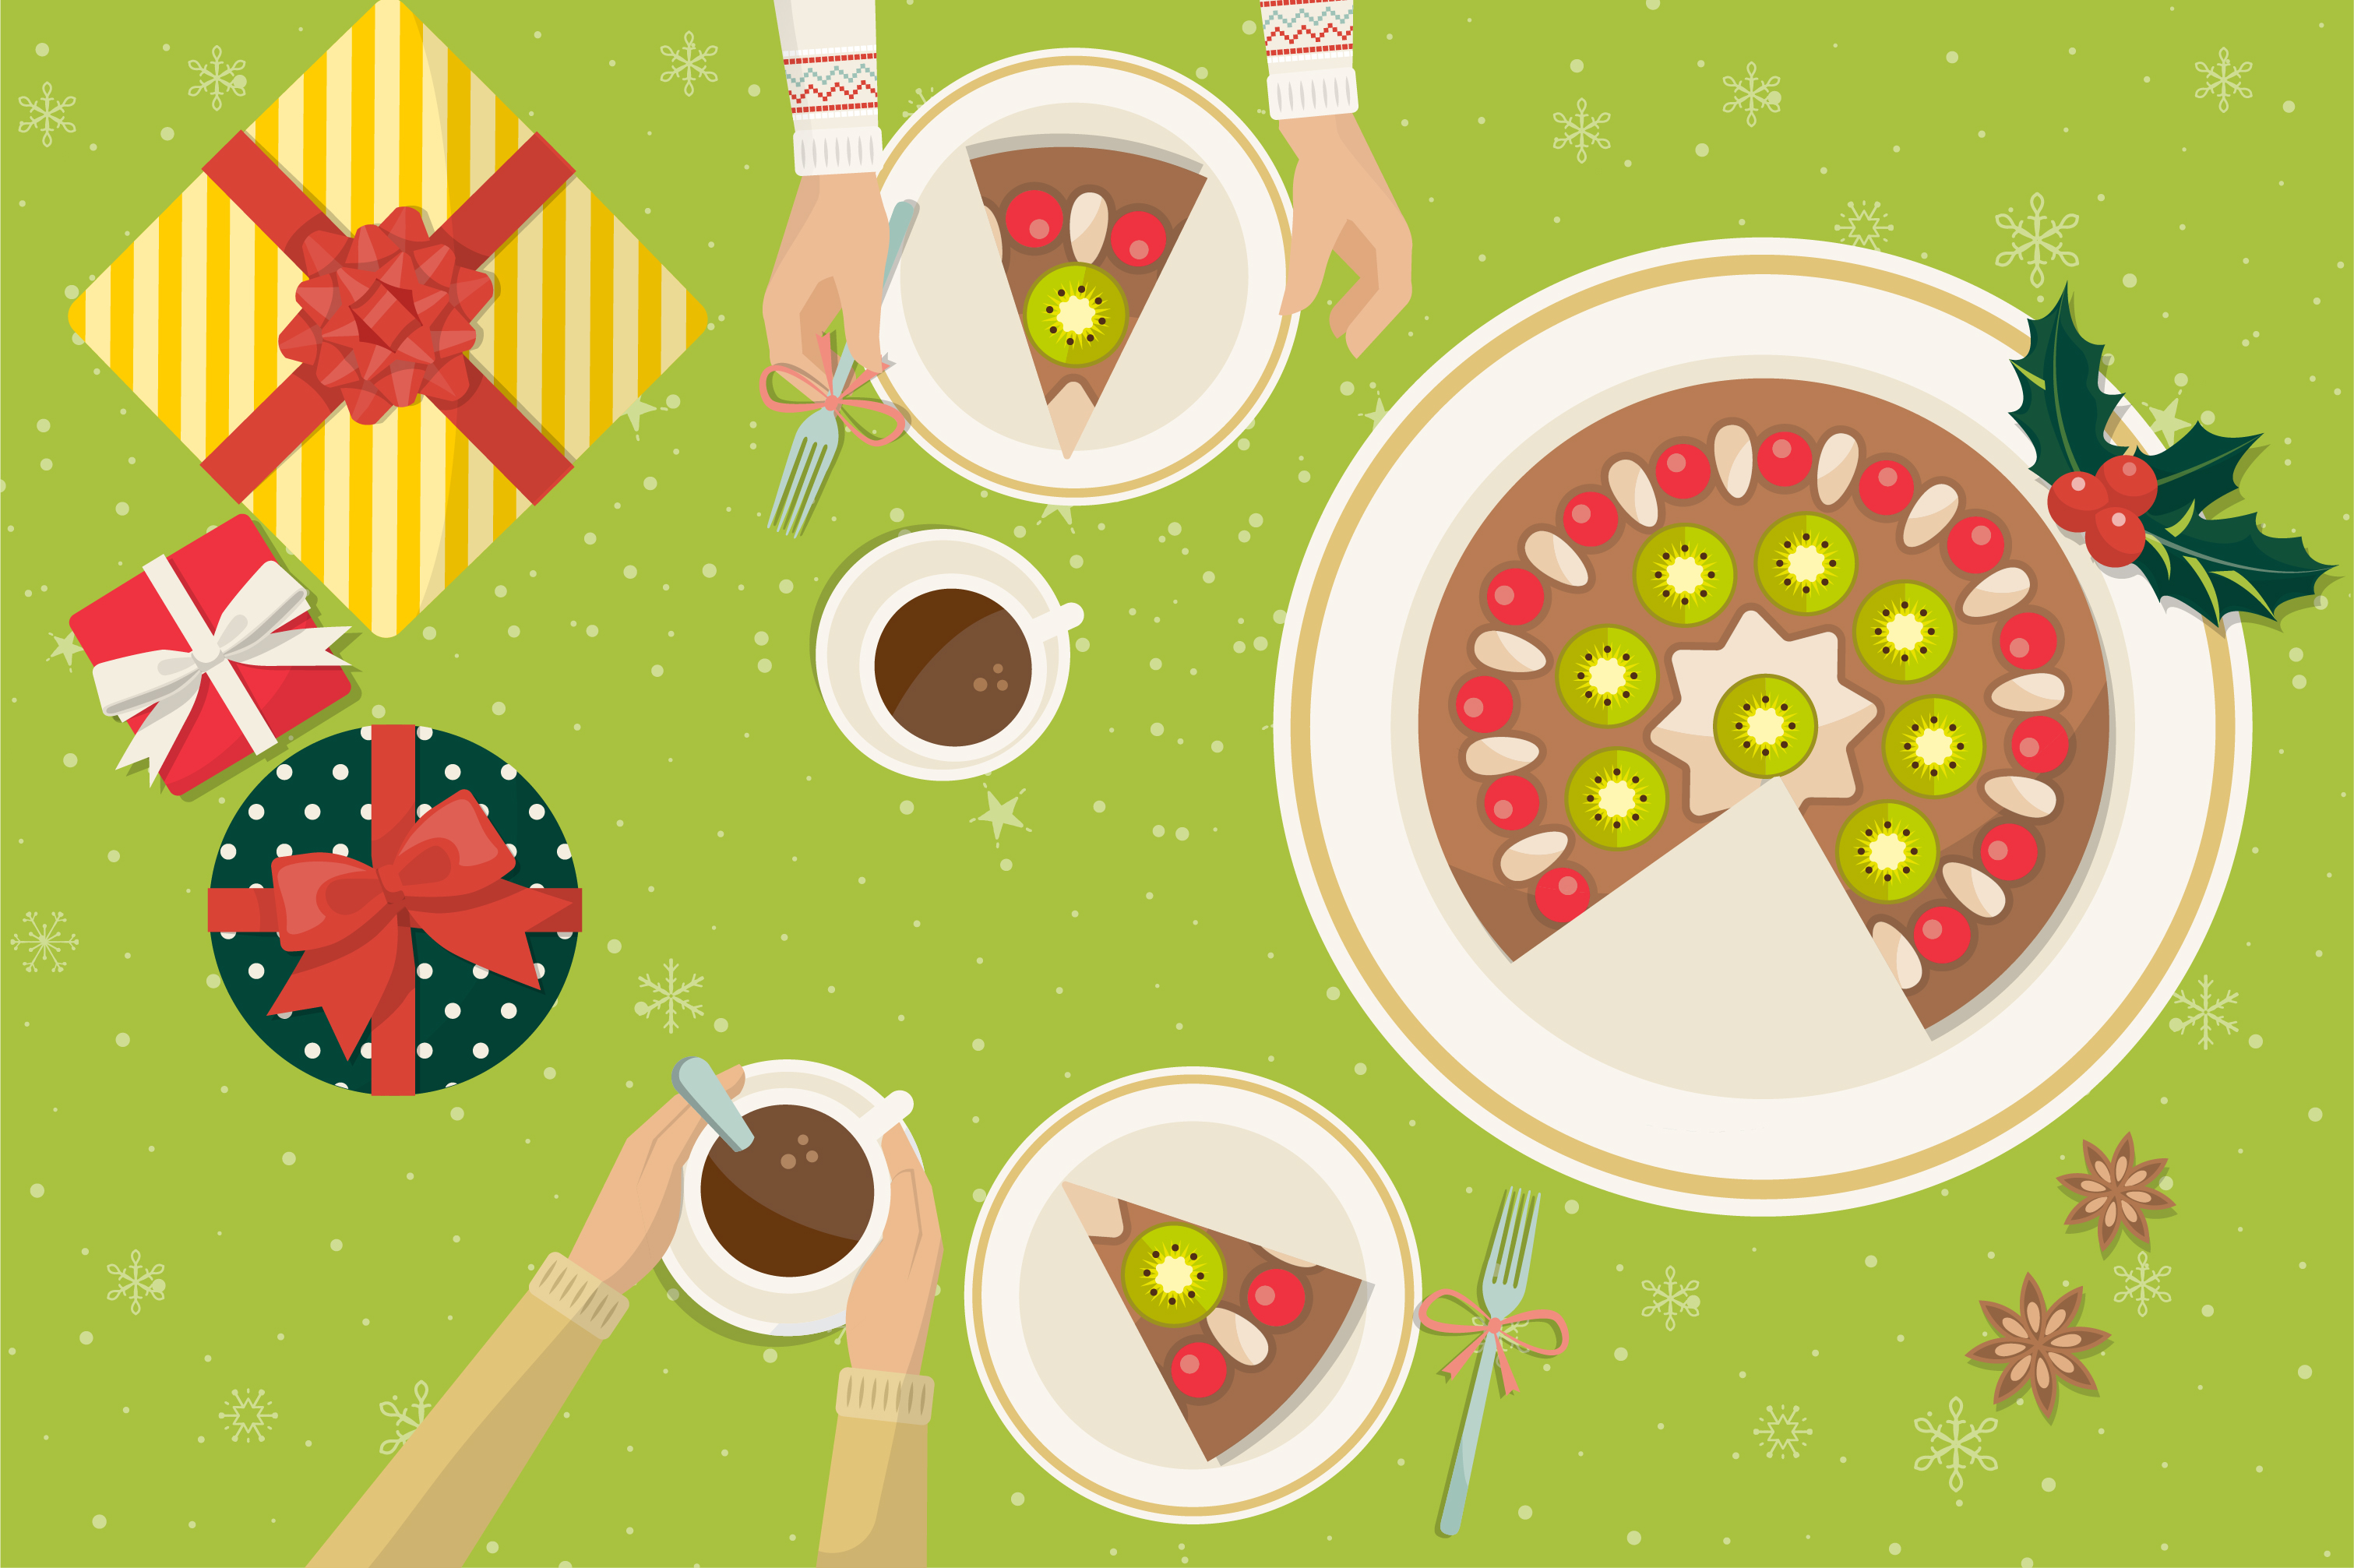 4 vitality kiwifruit desserts for a delicious Holiday Season